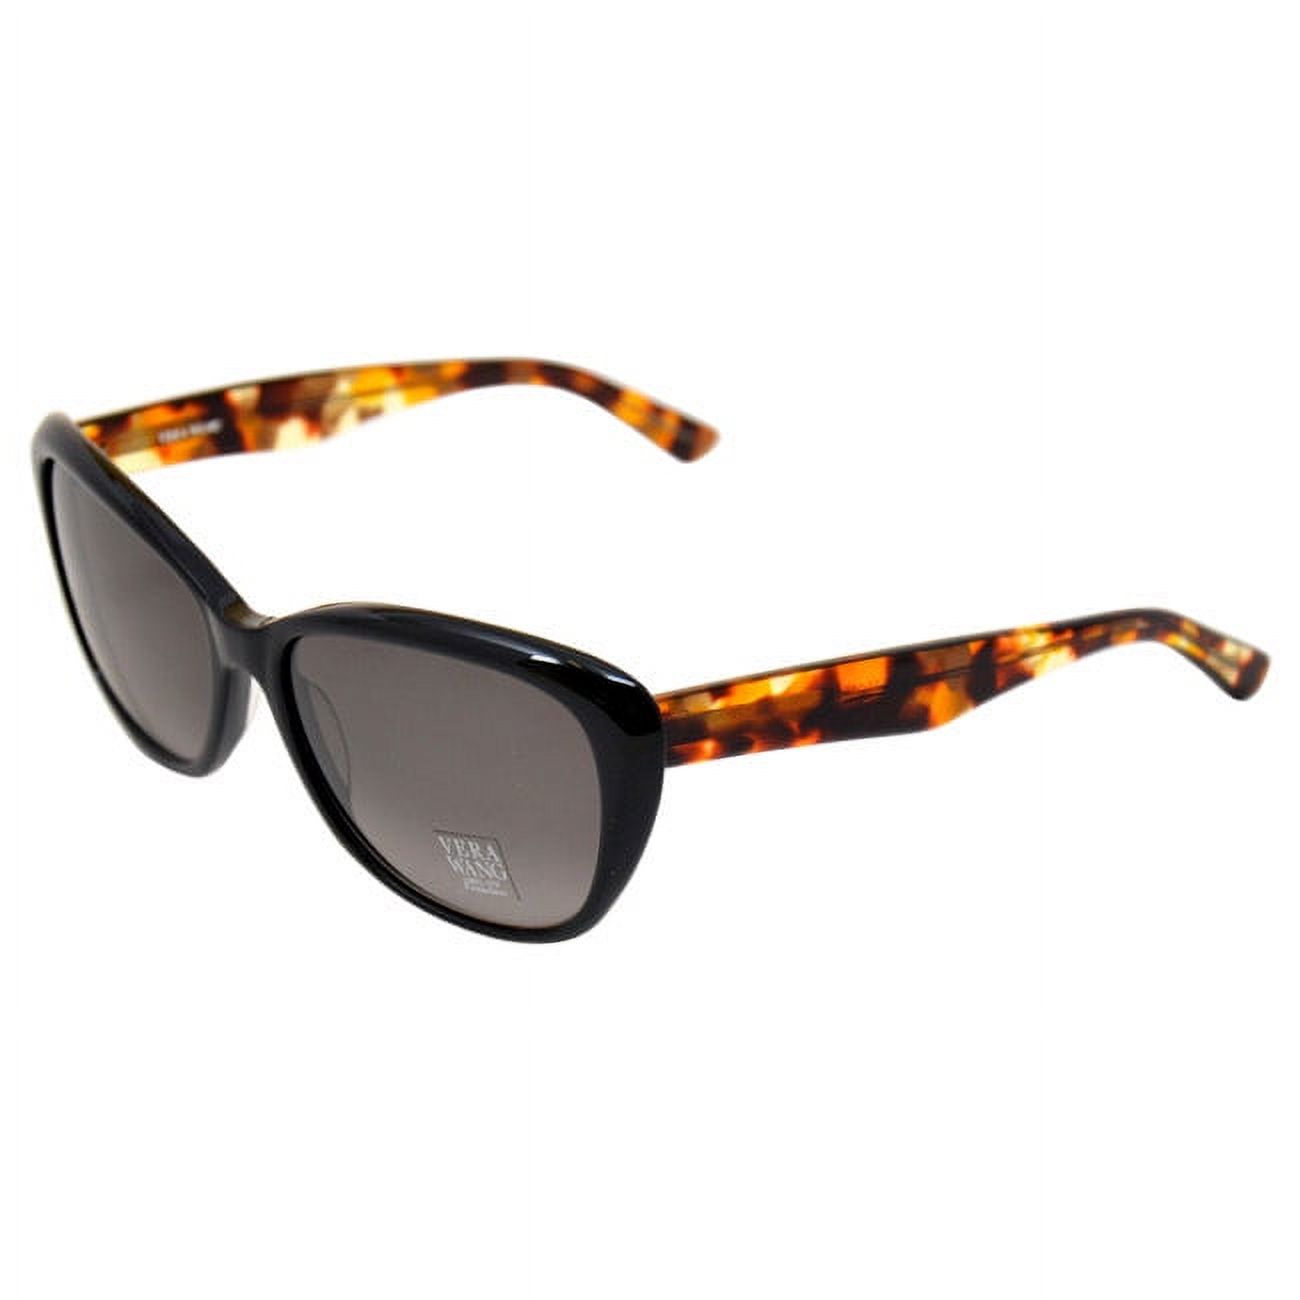 V400 - Black Vera Wang 56-16-140 mm Sunglasses Women - image 2 of 5